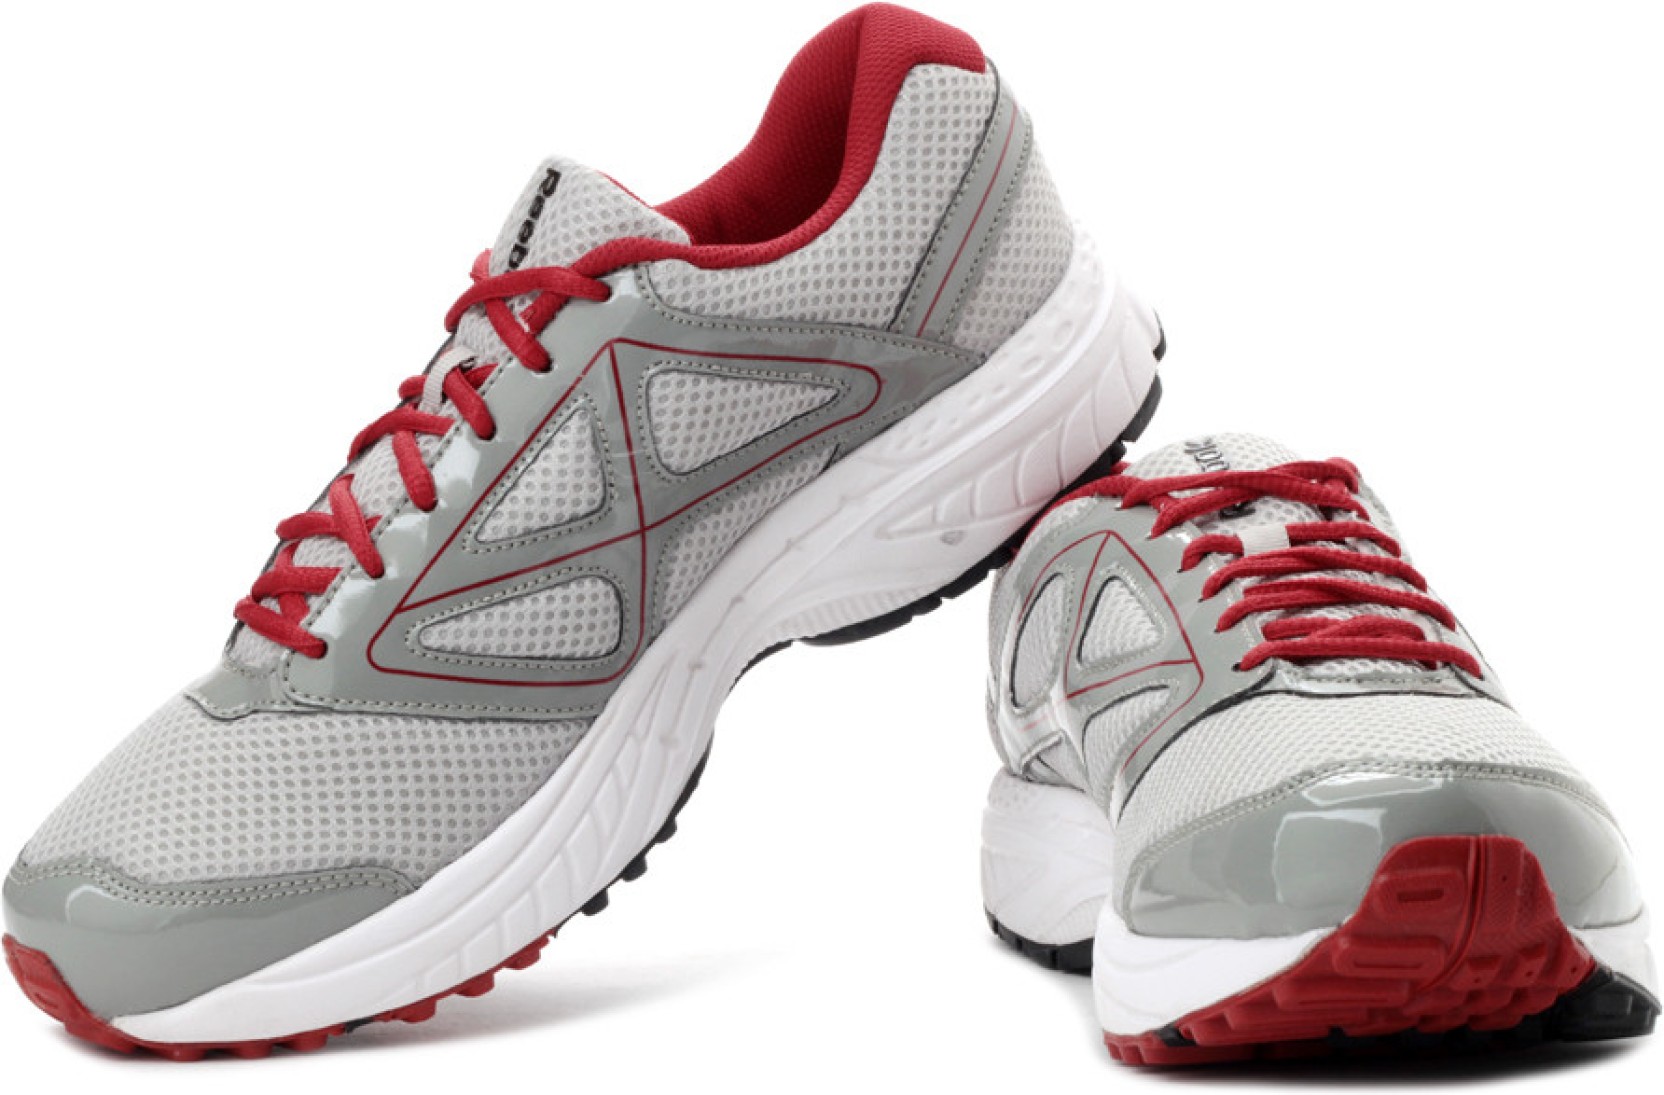 Reebok Speed Runner Lp Running Shoes - Buy Silver, Red Color Reebok ...